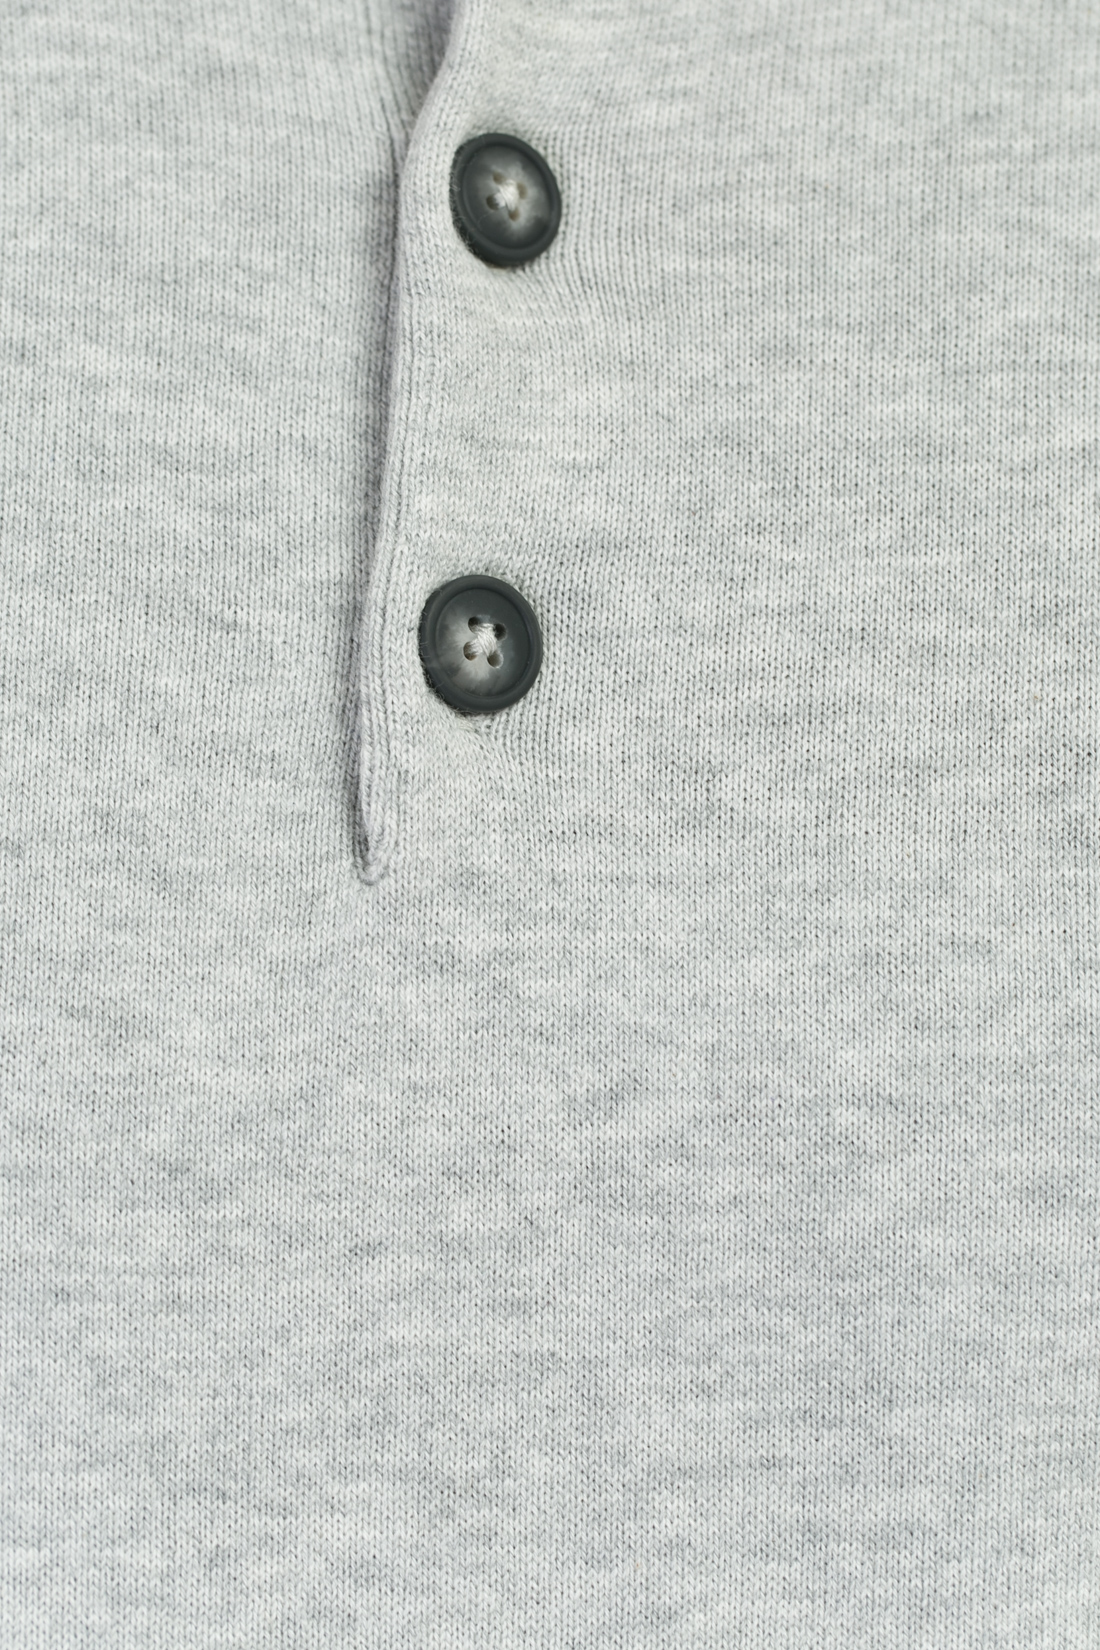 Джемпер с воротником-поло (арт. baon B637014), размер S, цвет silver melange#серый Джемпер с воротником-поло (арт. baon B637014) - фото 4